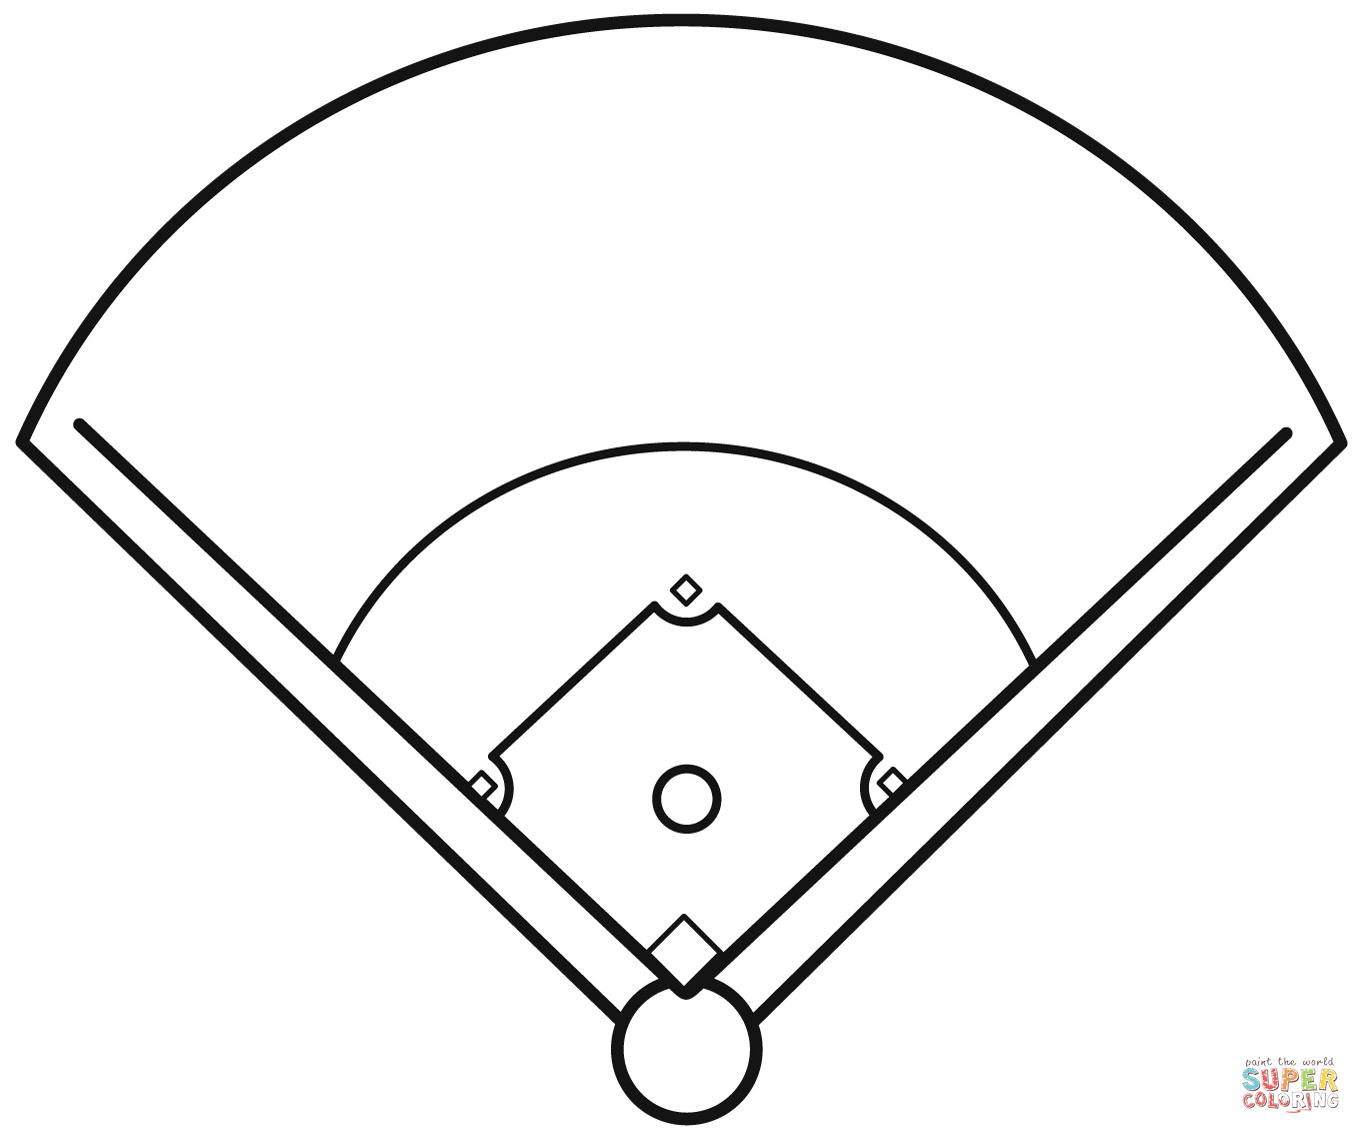 Baseball diamond coloring page free printable coloring pages